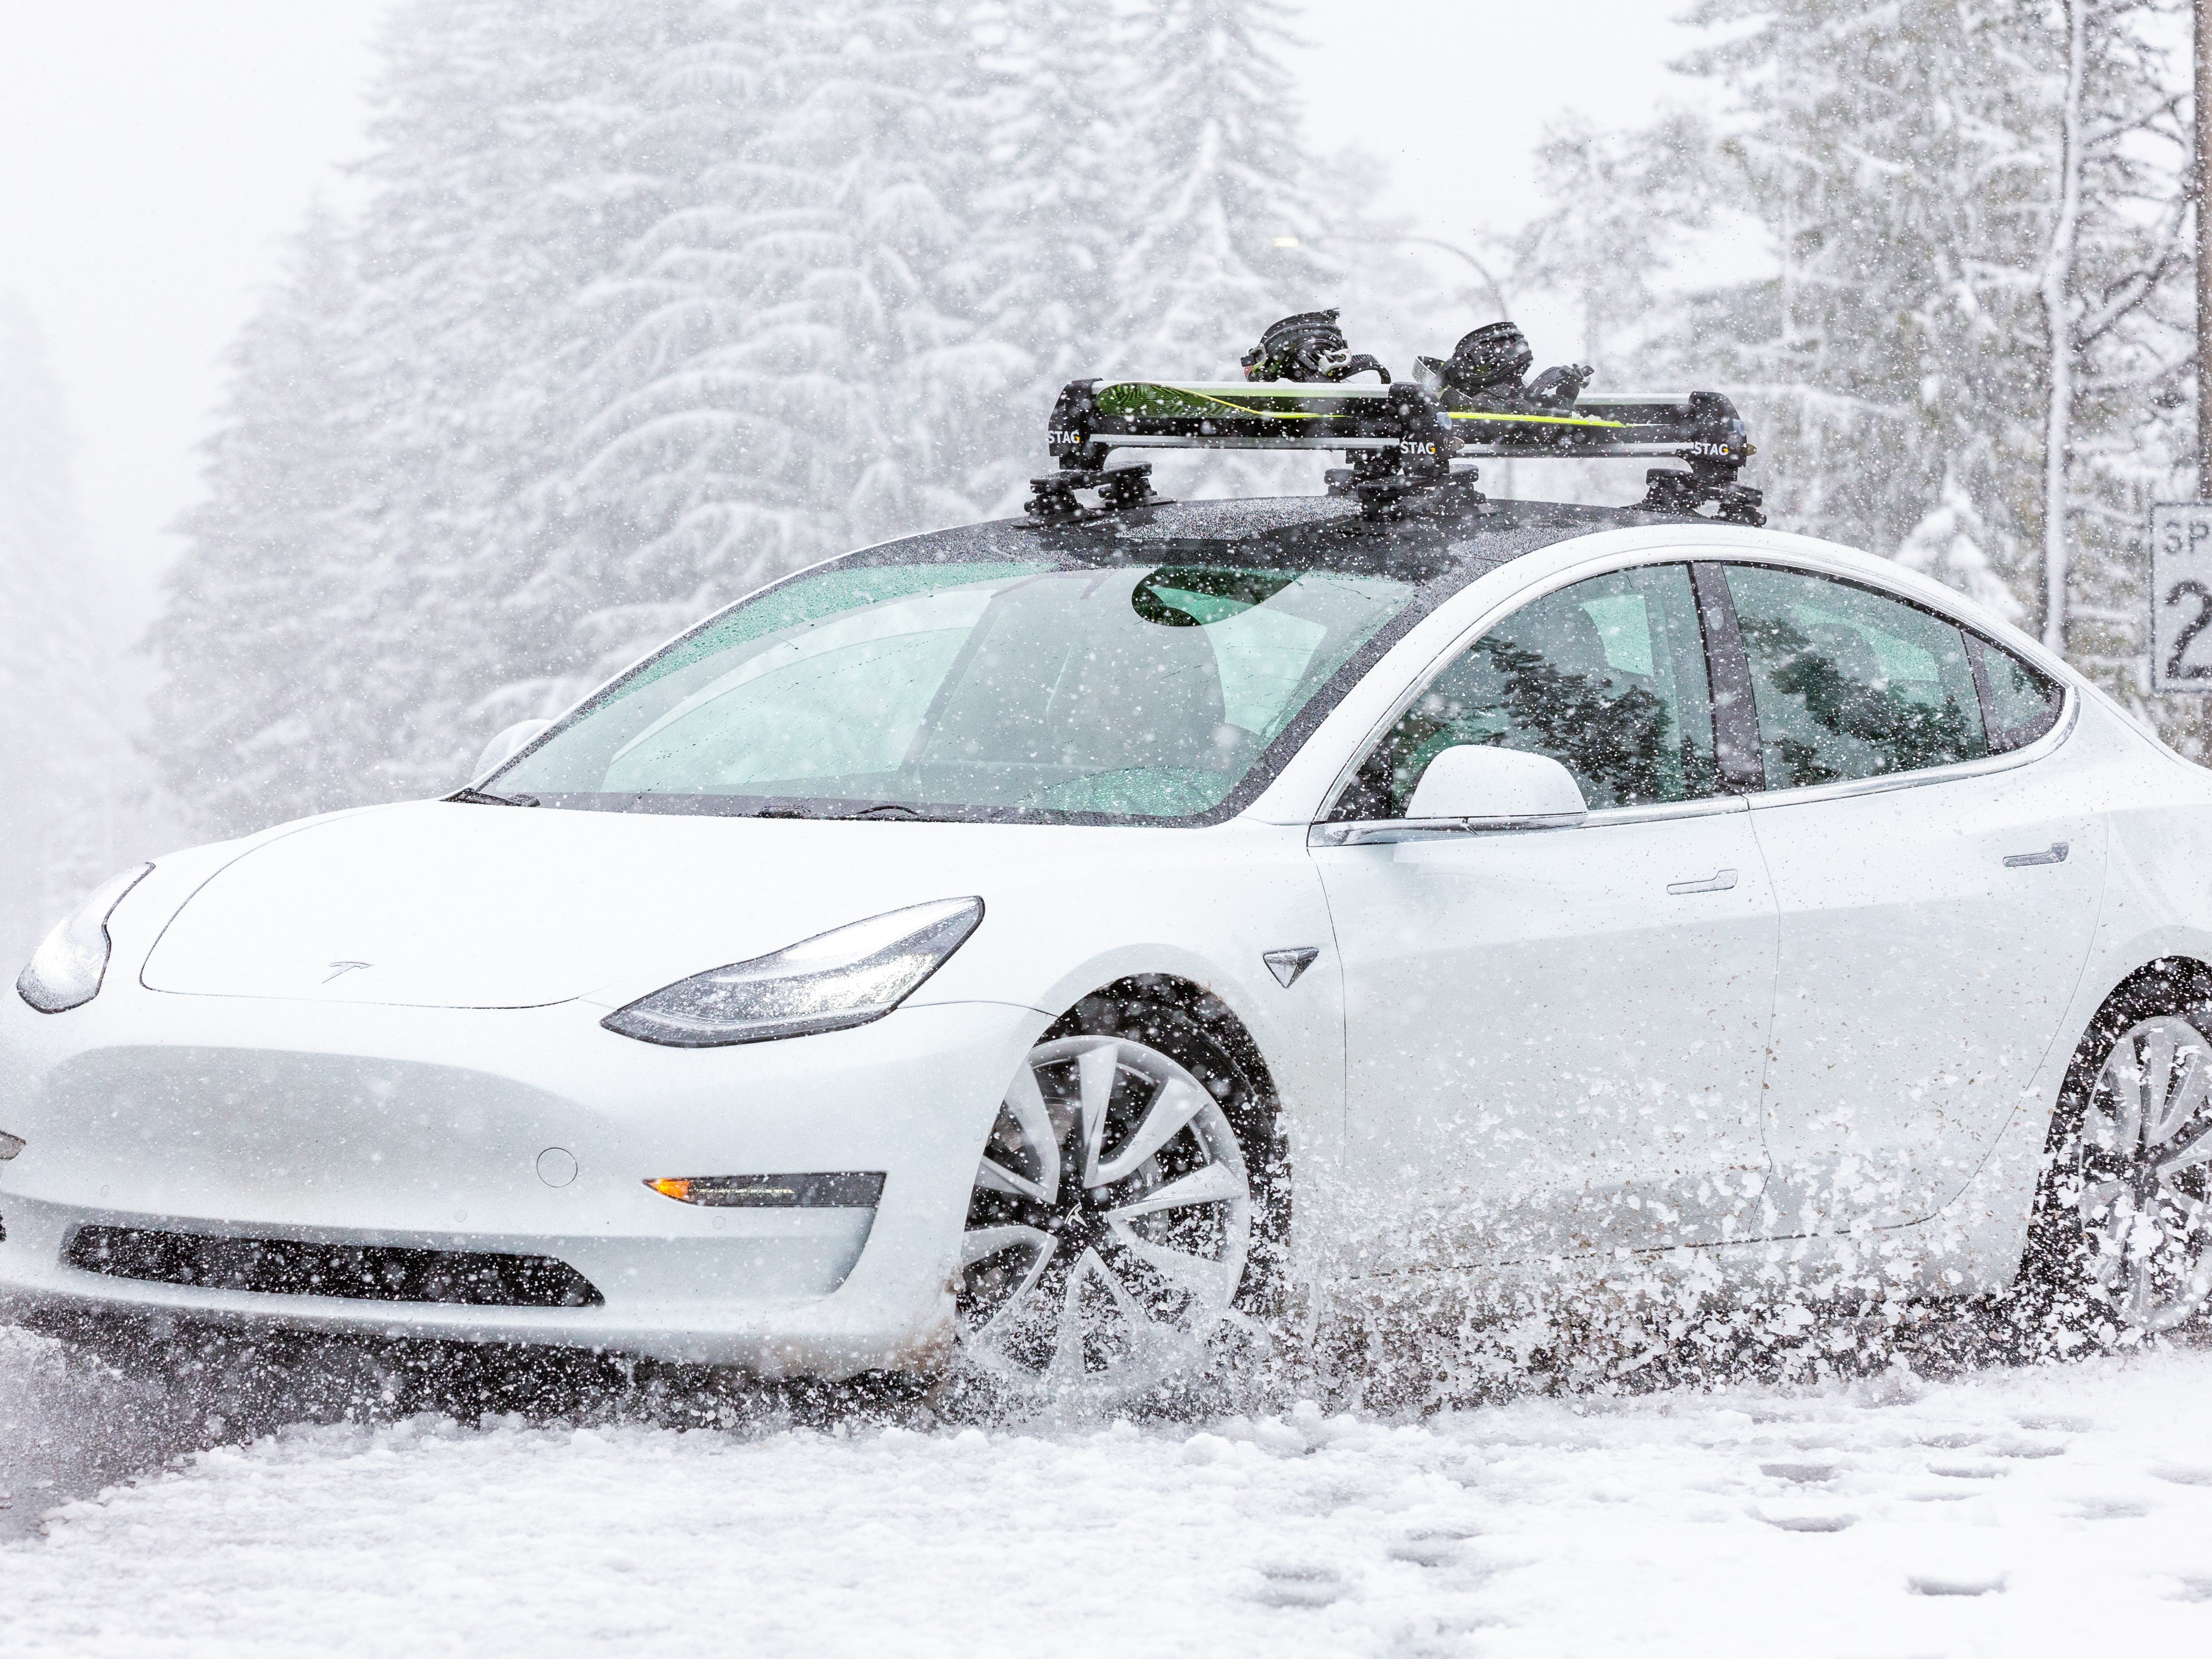 The Best Ski Racks for Your Car in 2022 - Ski and Snowboard Car Racks